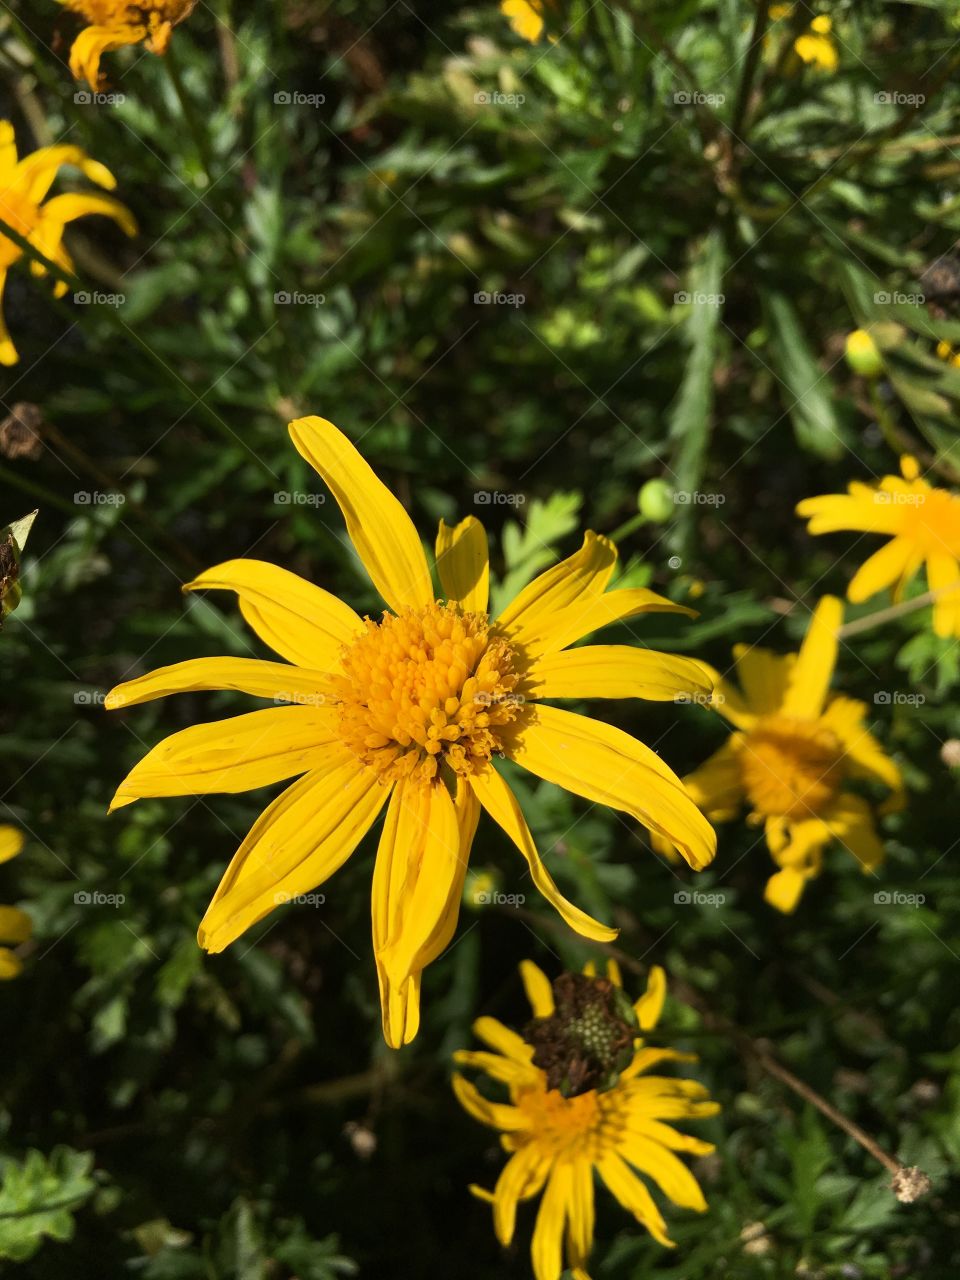 A beautiful yellow flower